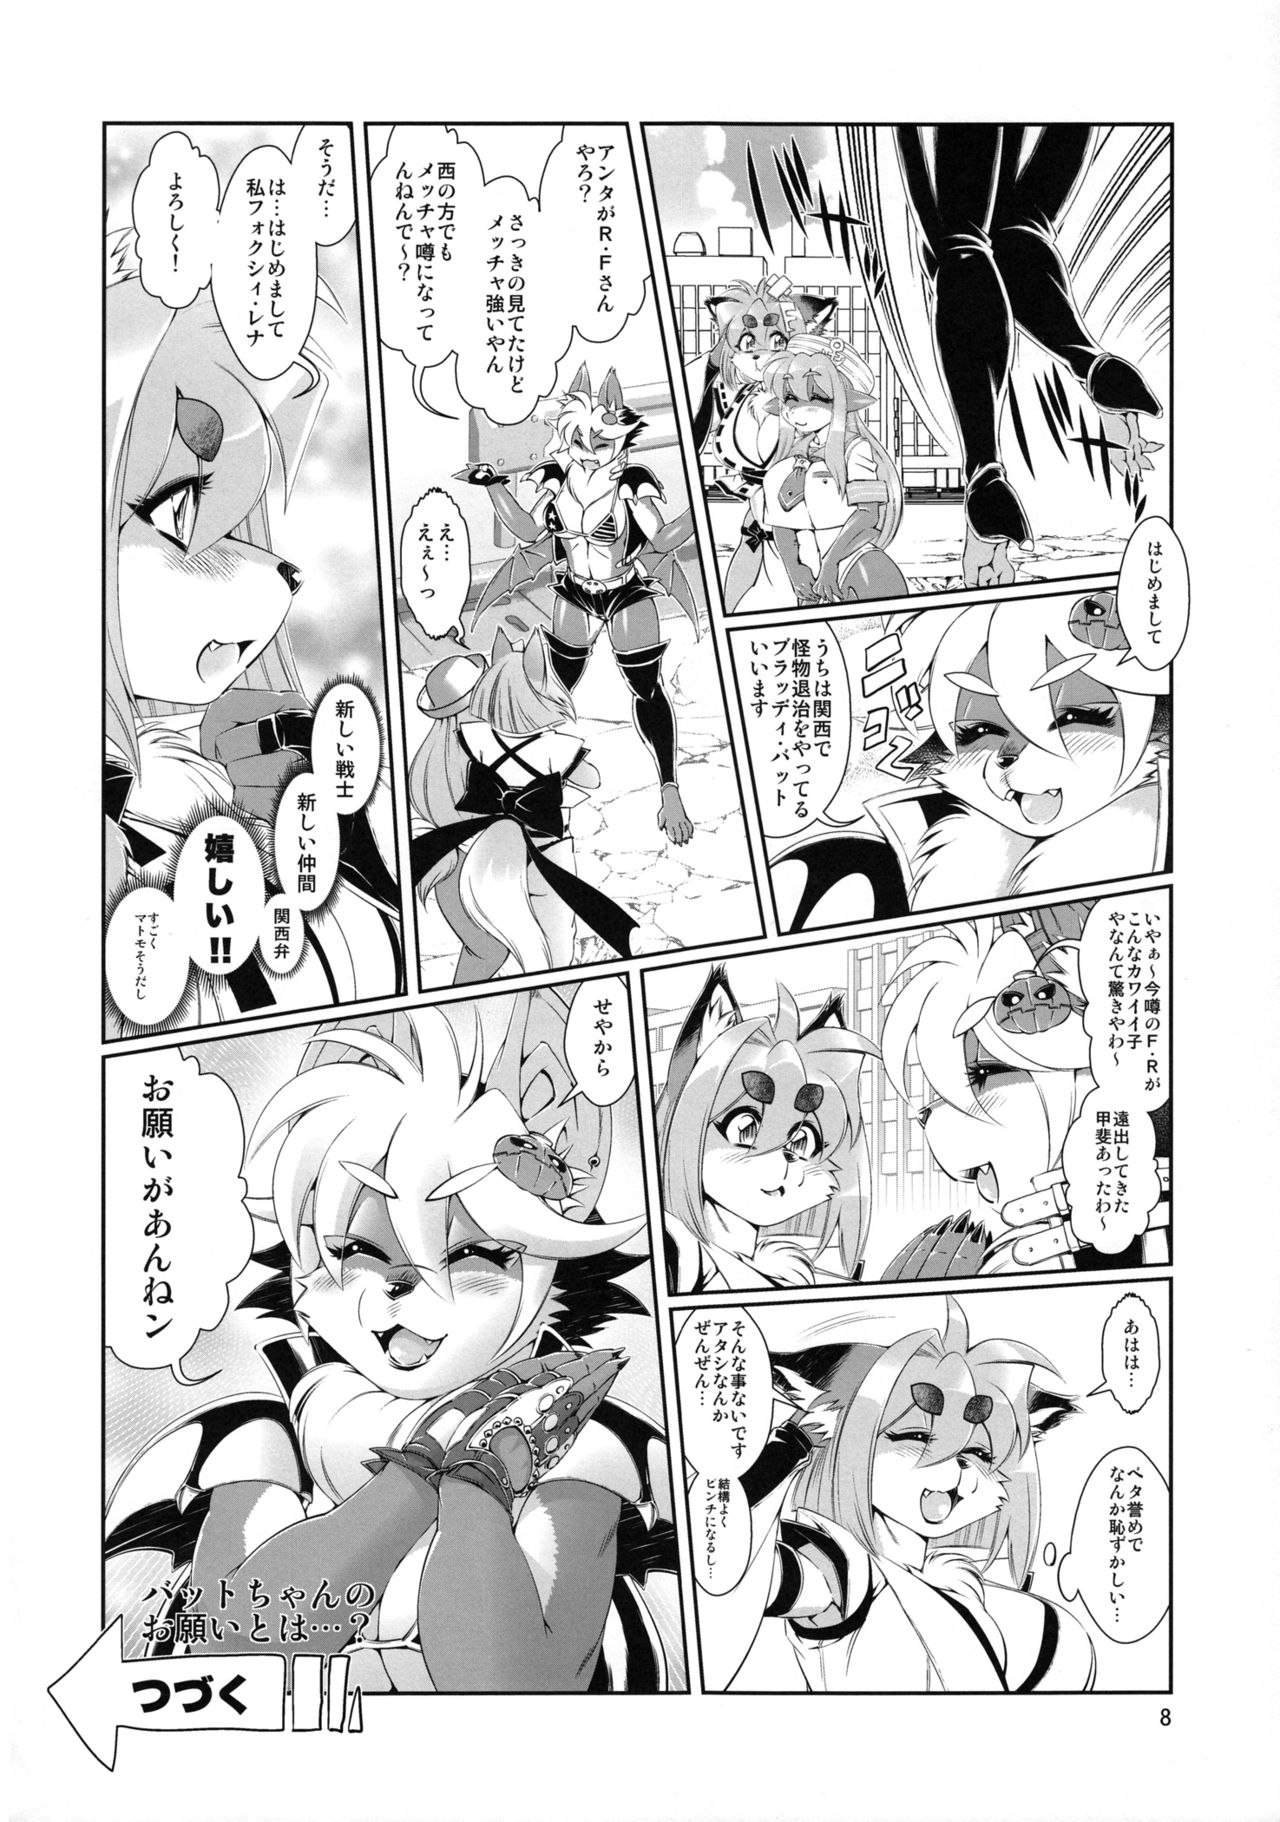 (Fur-st 6) [SweetTaste (Amakuchi)] Mahou no Juujin Foxy Rena 5 Digest (ふぁーすと6) [Sweet Taste (甘口)] 魔法の獣人フォクシィ・レナ 5 だいじぇすと